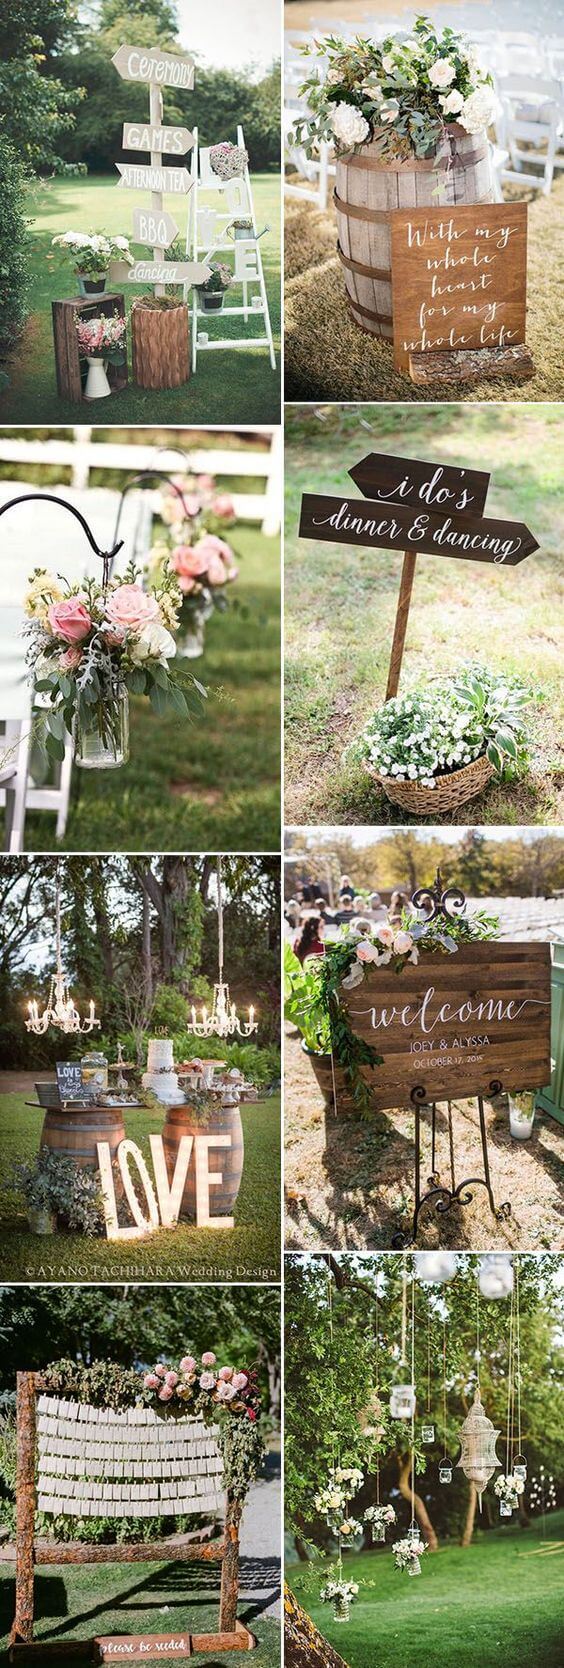 Wedding Welcome sign ideas | Creative & Rustic Backyard Wedding Ideas For Summer & Fall